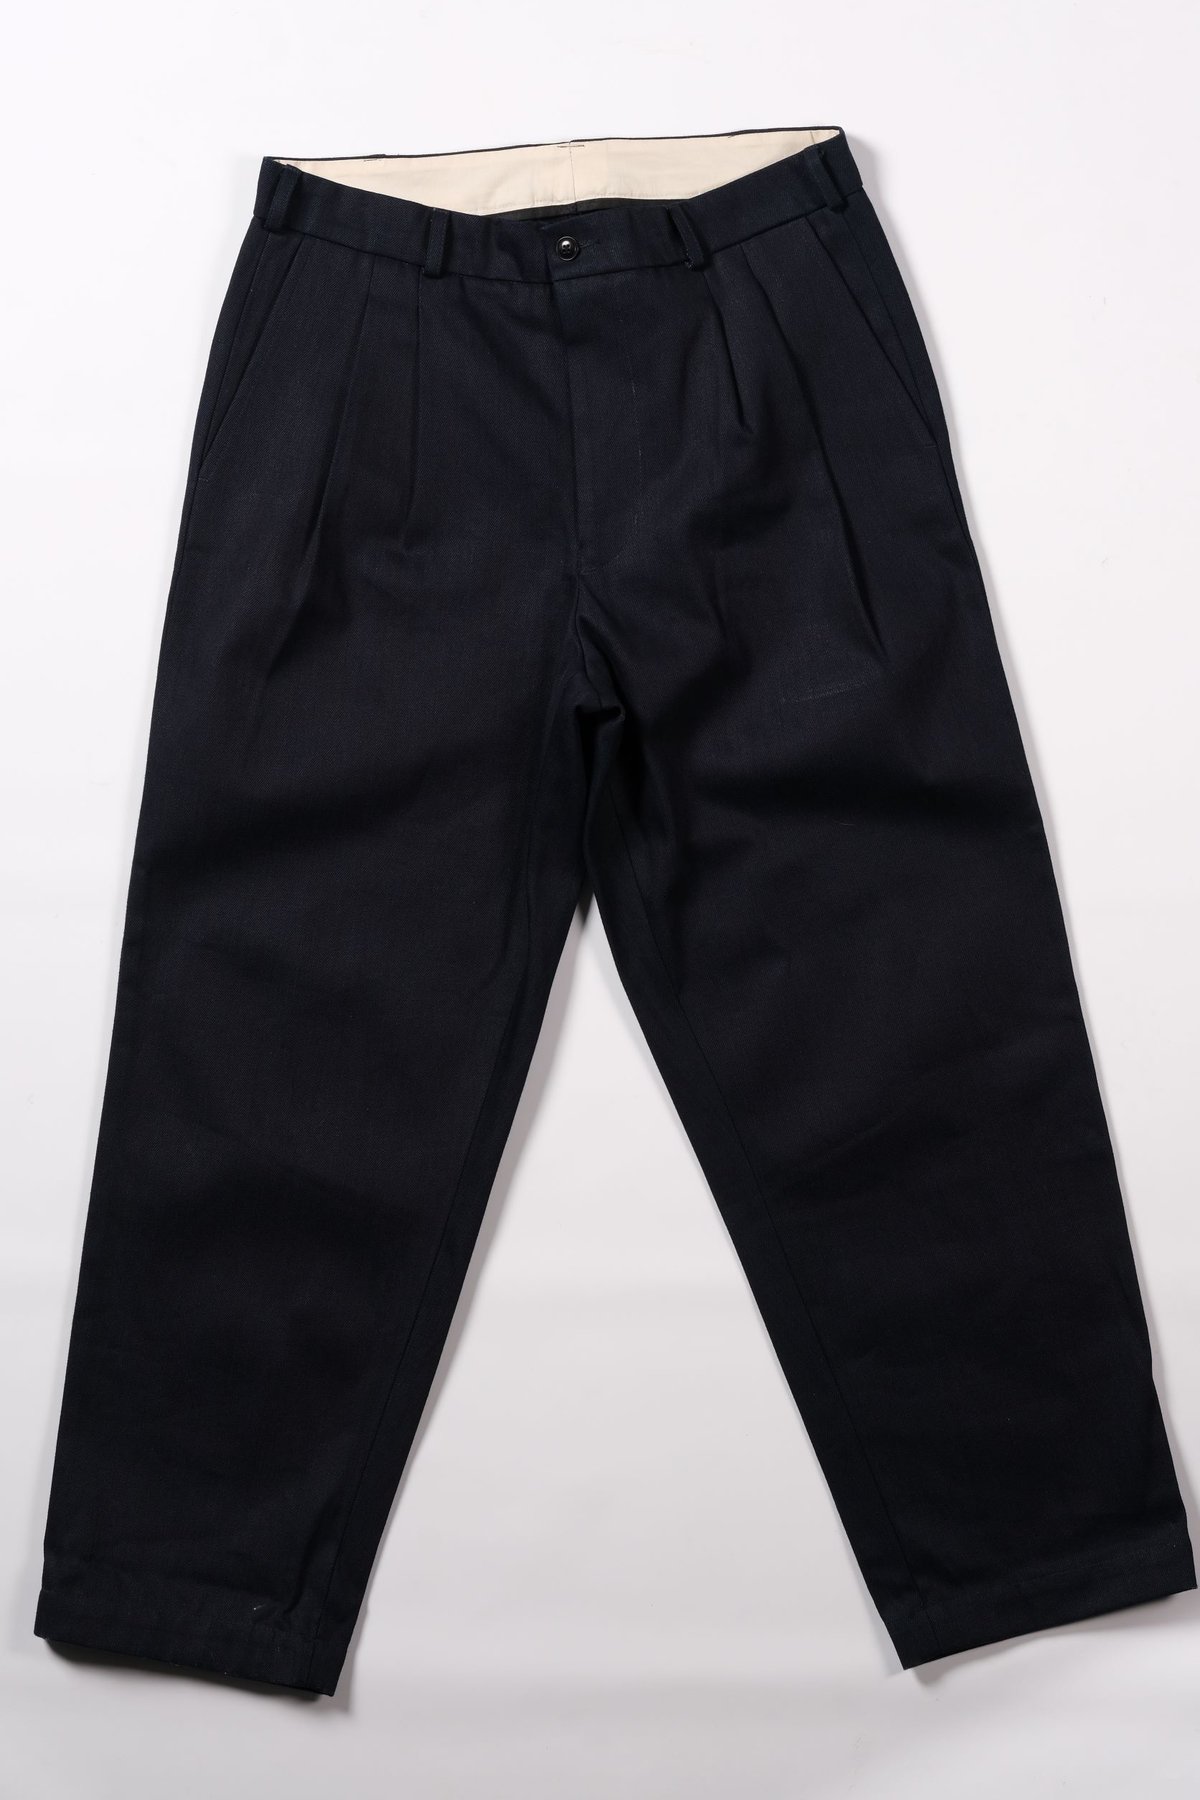 Top Boy Trouser in Japan Indigo £240.00 | Workhouse England